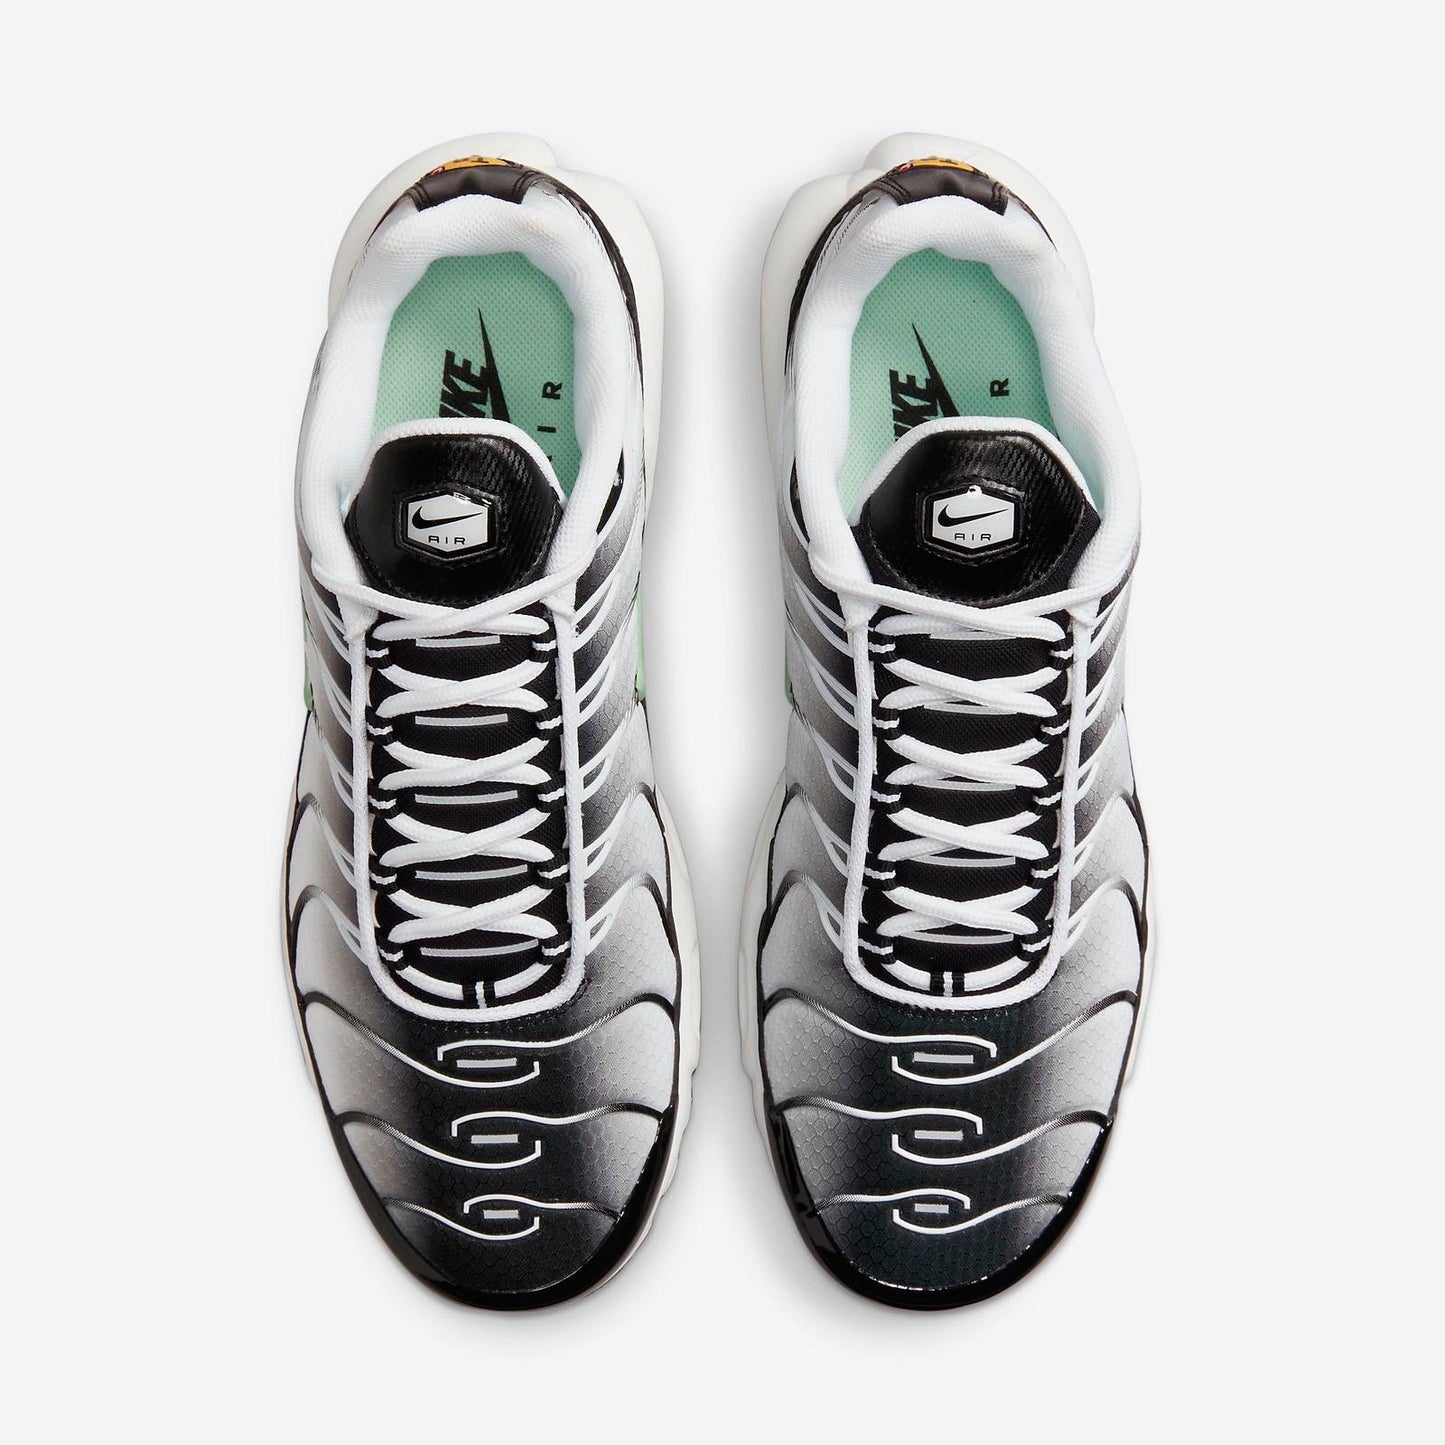 Nike Air Max Plus TN – White/Black - Mint Green